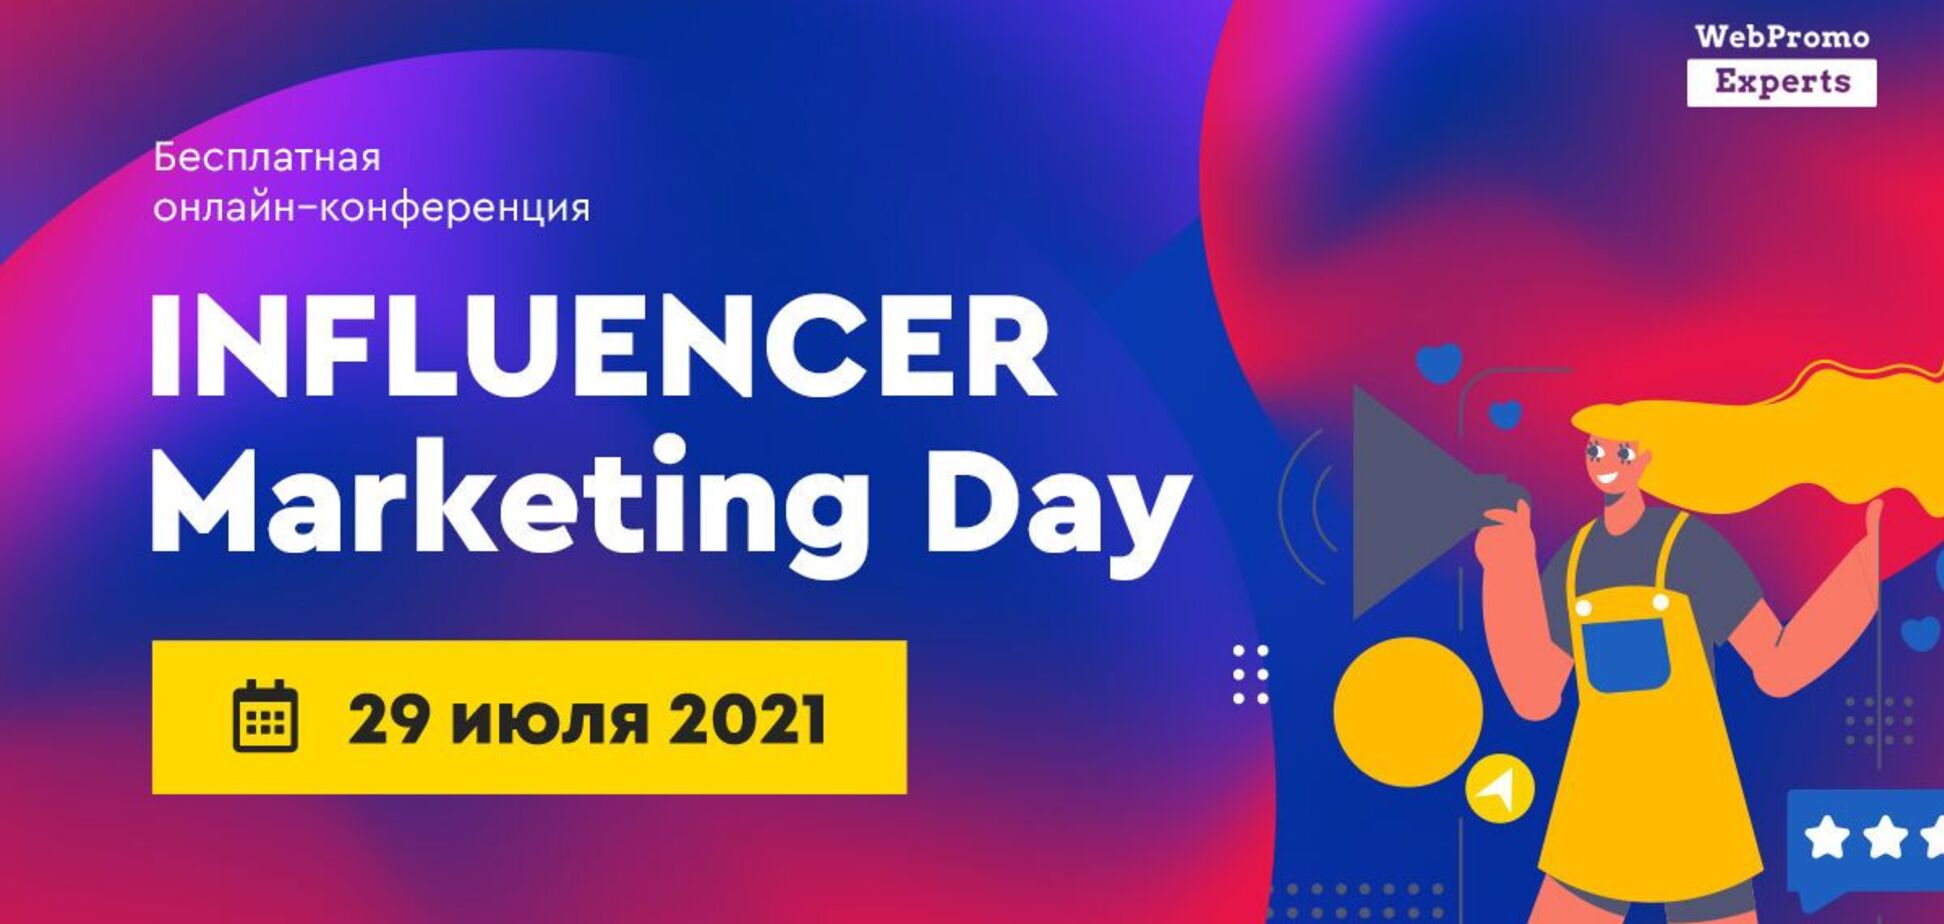 Influencer Marketing Day від WebPromoExperts пройде 29 липня